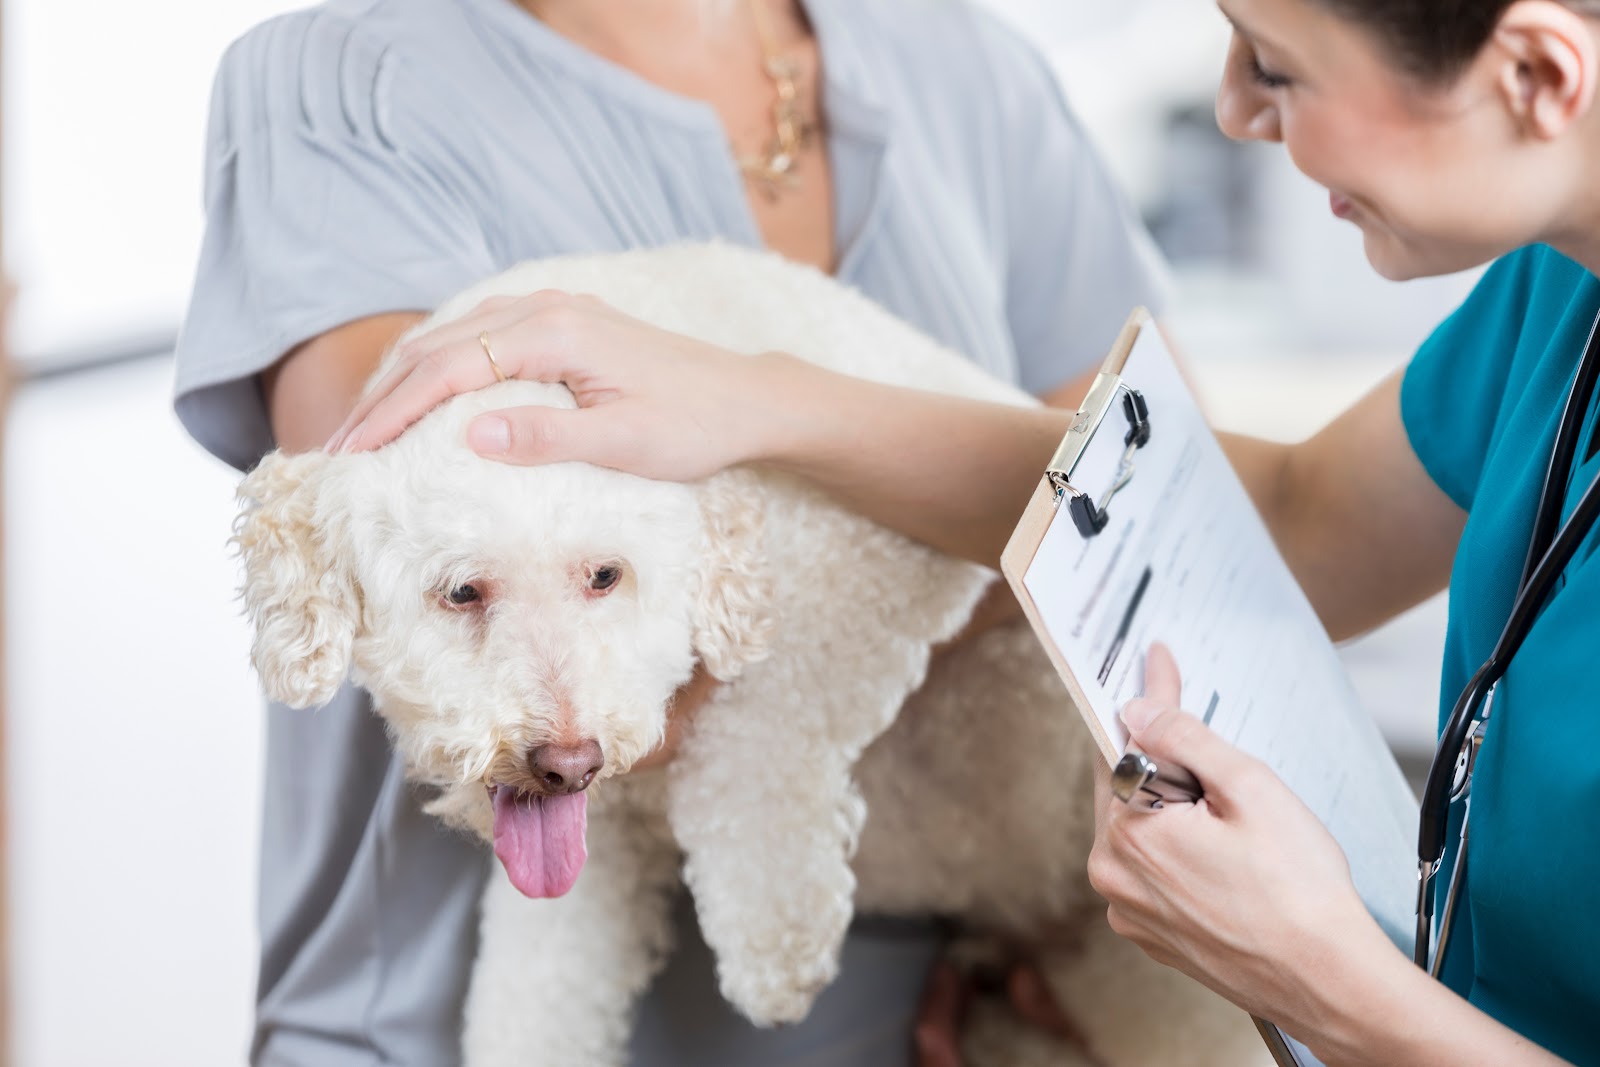 family pet health care needs checklist benefits